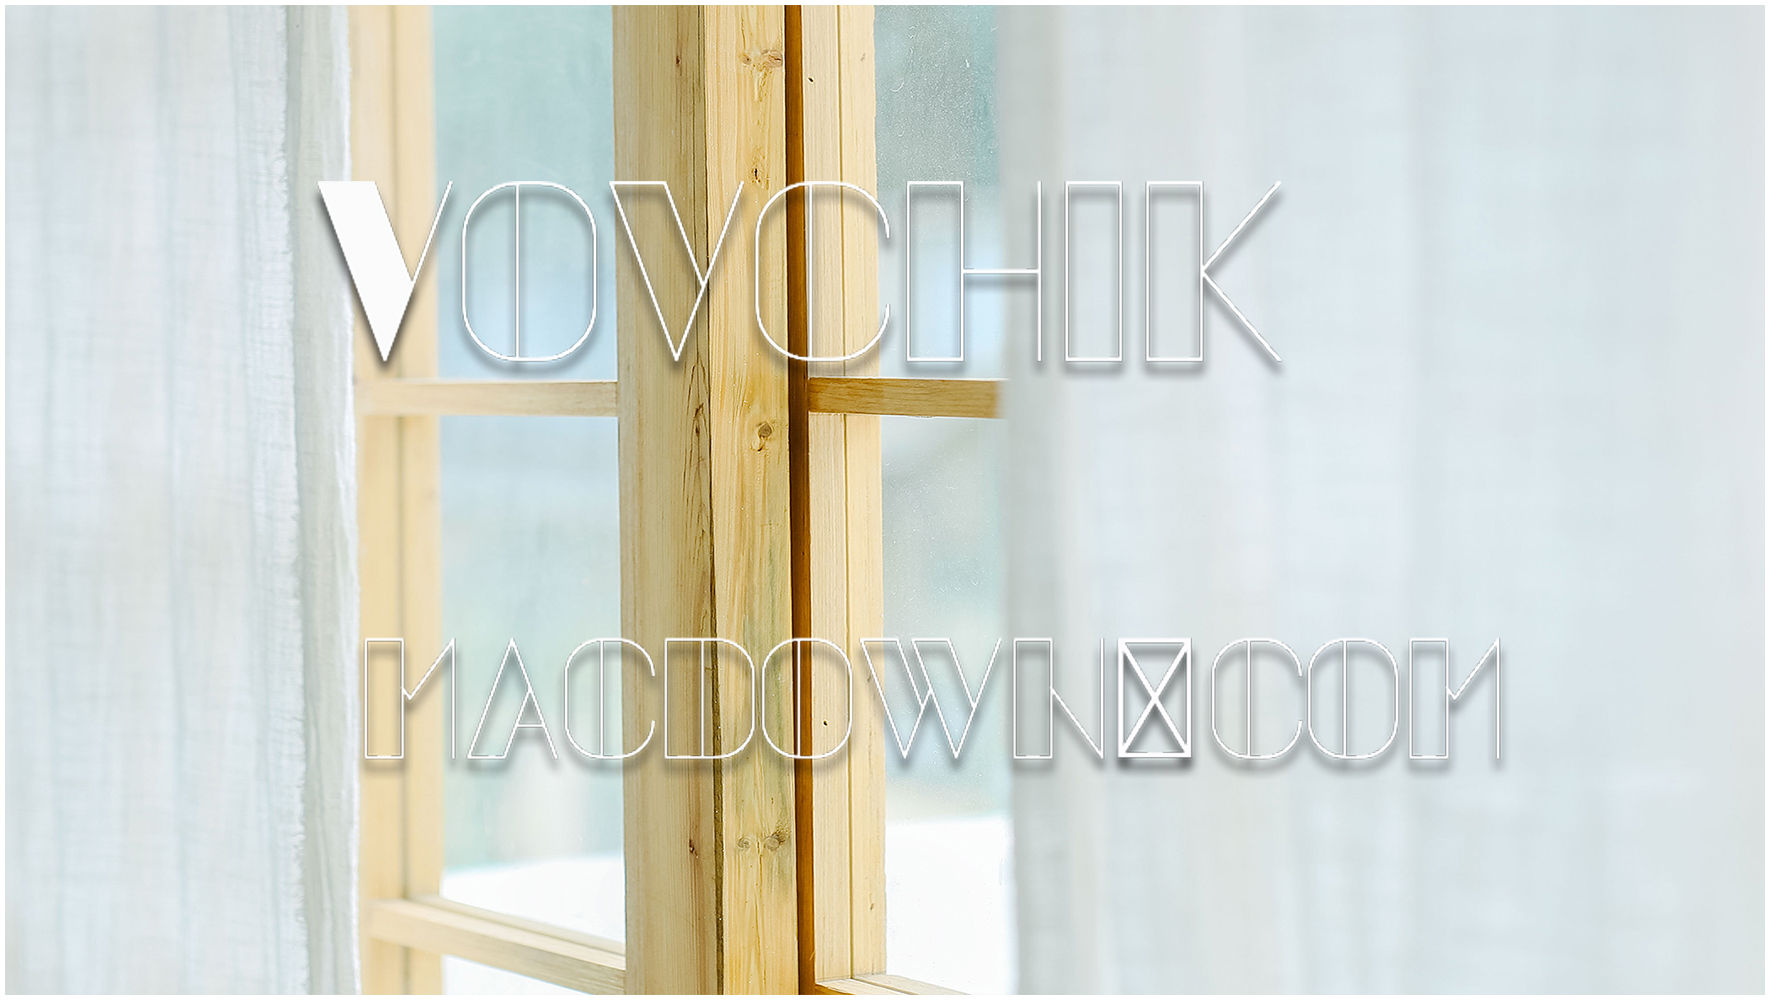 Vovchik Serfi粗体衬线字体